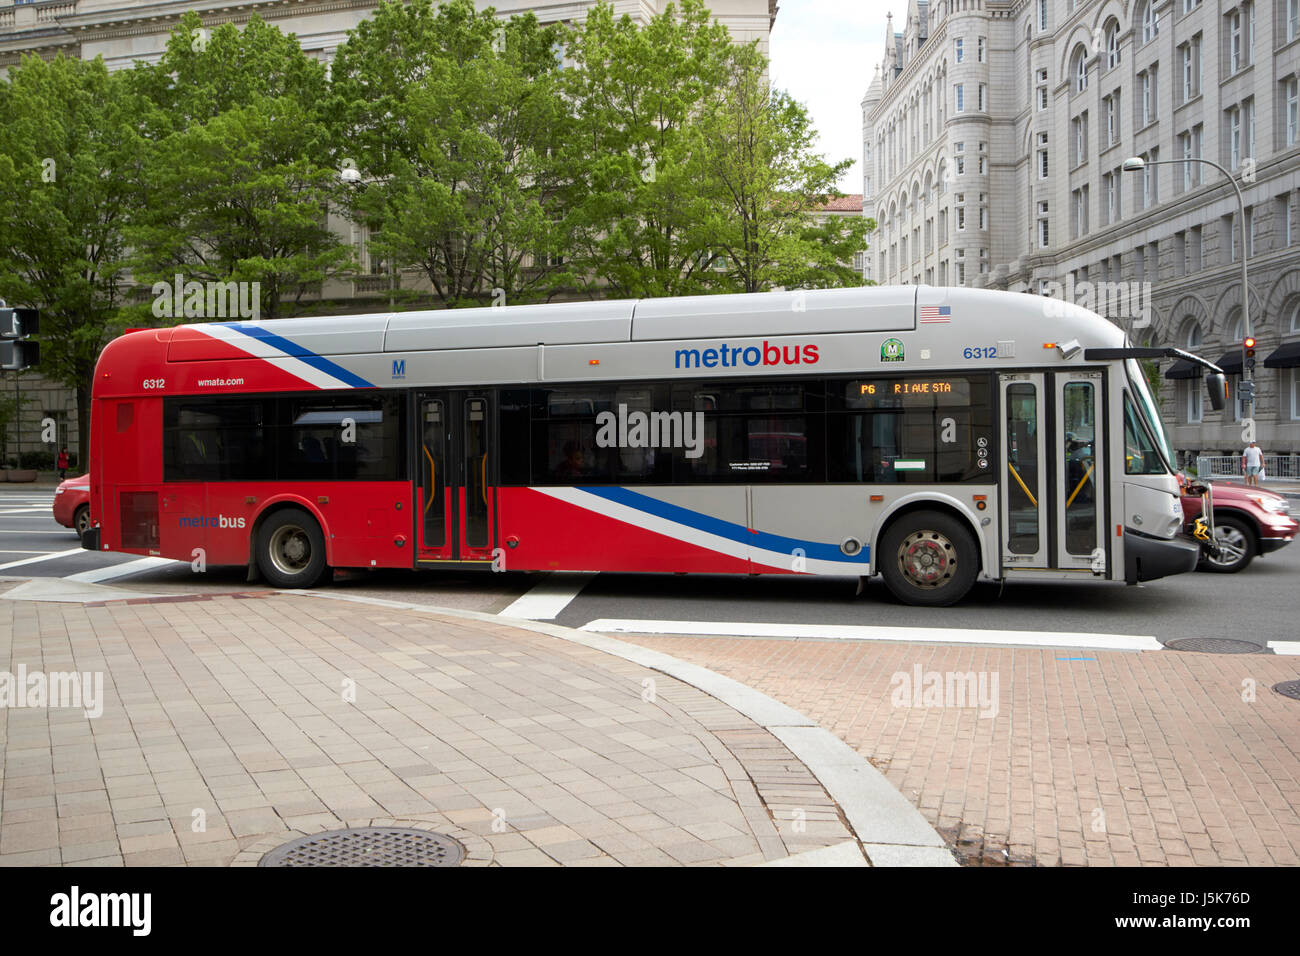 wmata washington metrobus xcelsior hybrid diesel electric bus by new flyer industries Washington DC USA, deliberate motion blur Stock Photo